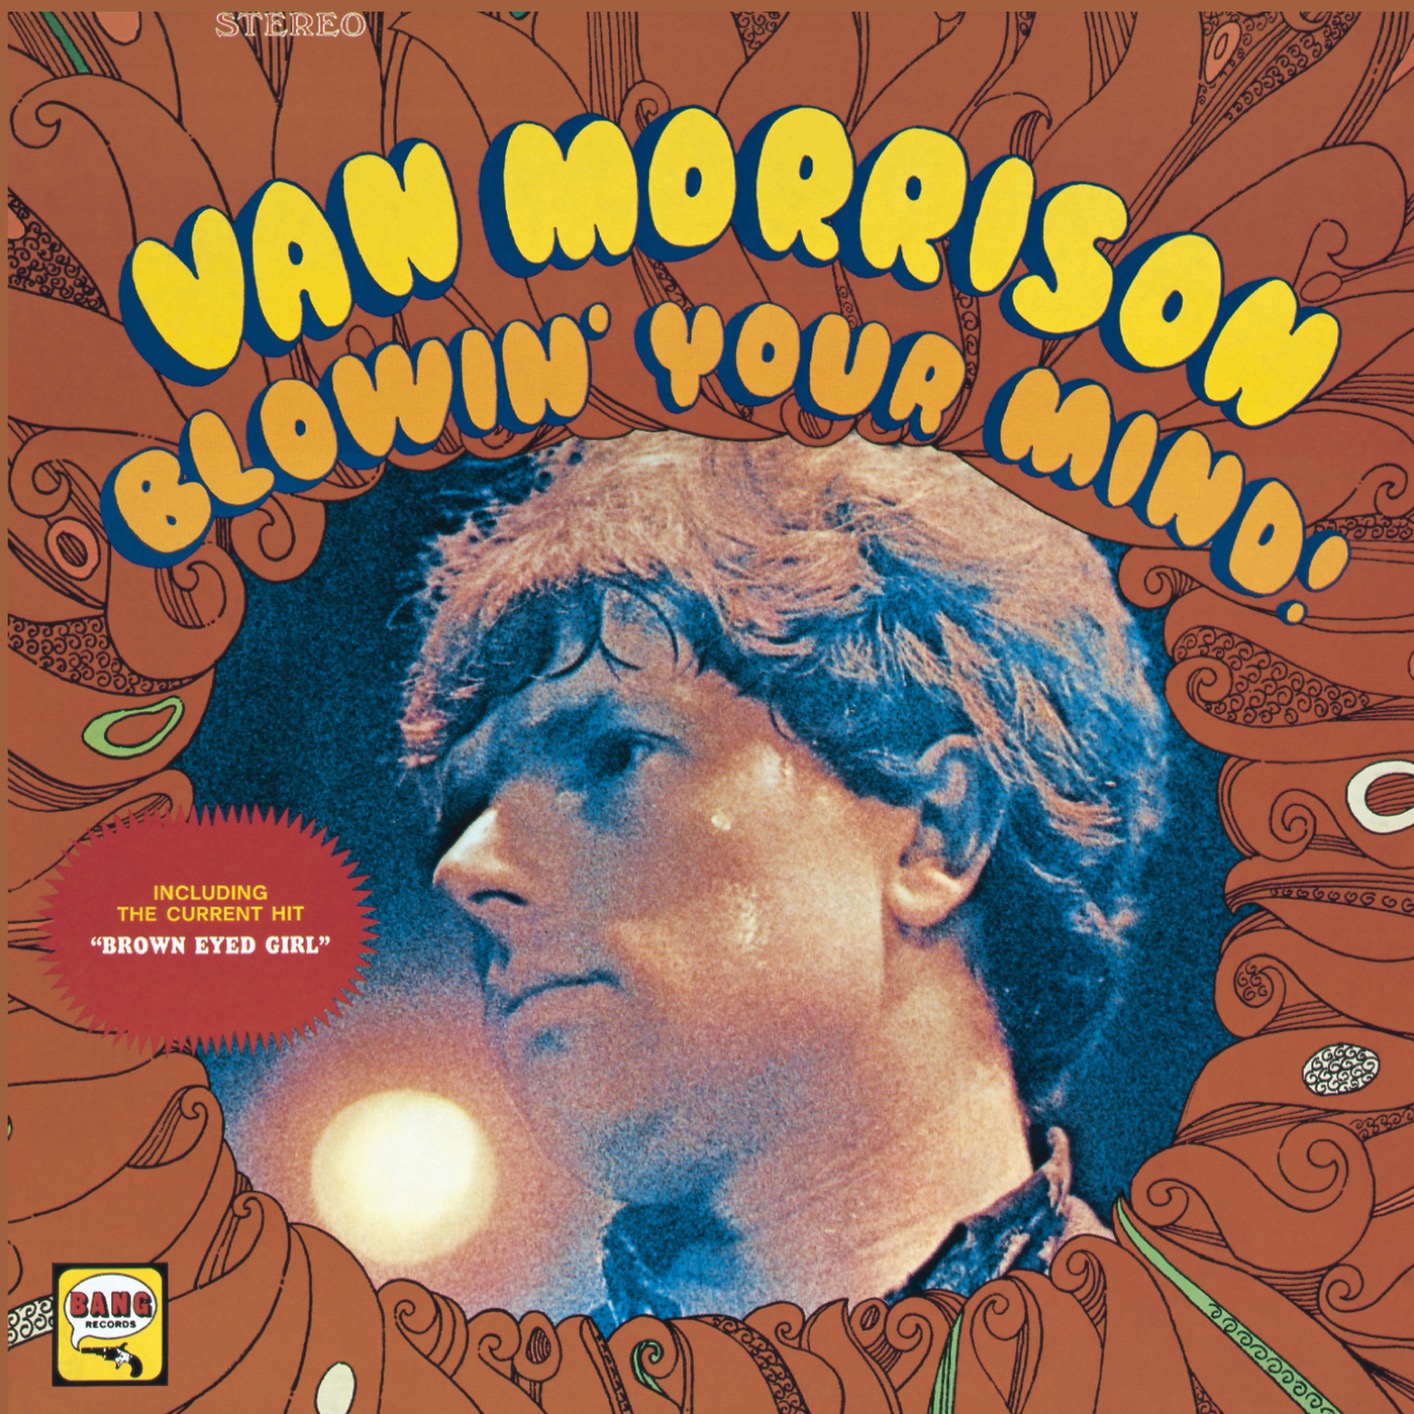 Van Morrison - Blowin’ Your Mind! (Remastered) (1967/2020) [FLAC 24bit/192kHz]